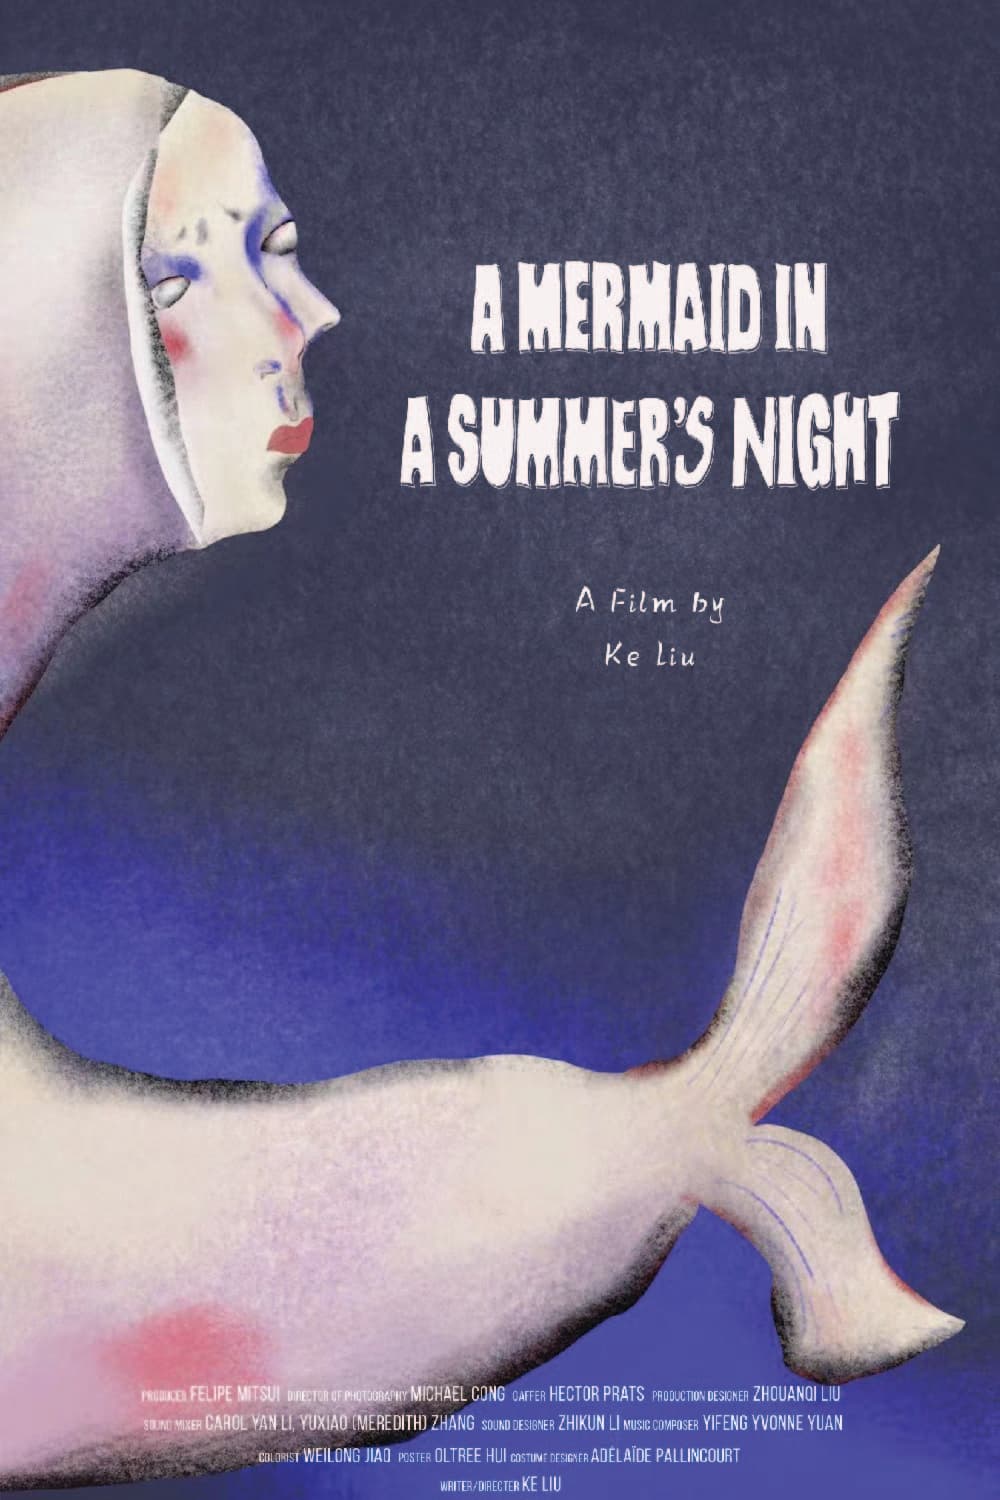 A Mermaid in a Summer's Night